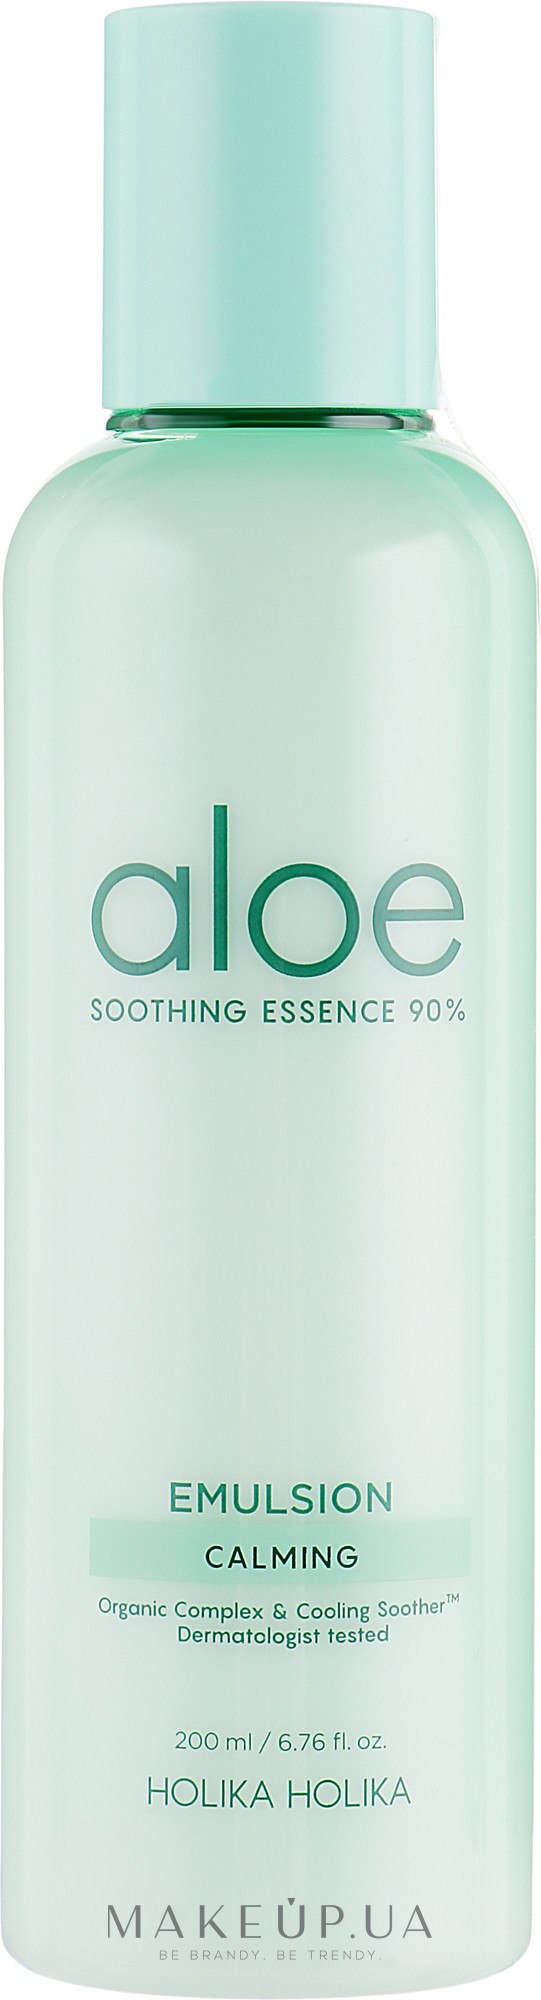 Зволожувальна емульсія для обличчя - Holika Holika Aloe Soothing Essence 90% Emulsion Calming — фото 200ml